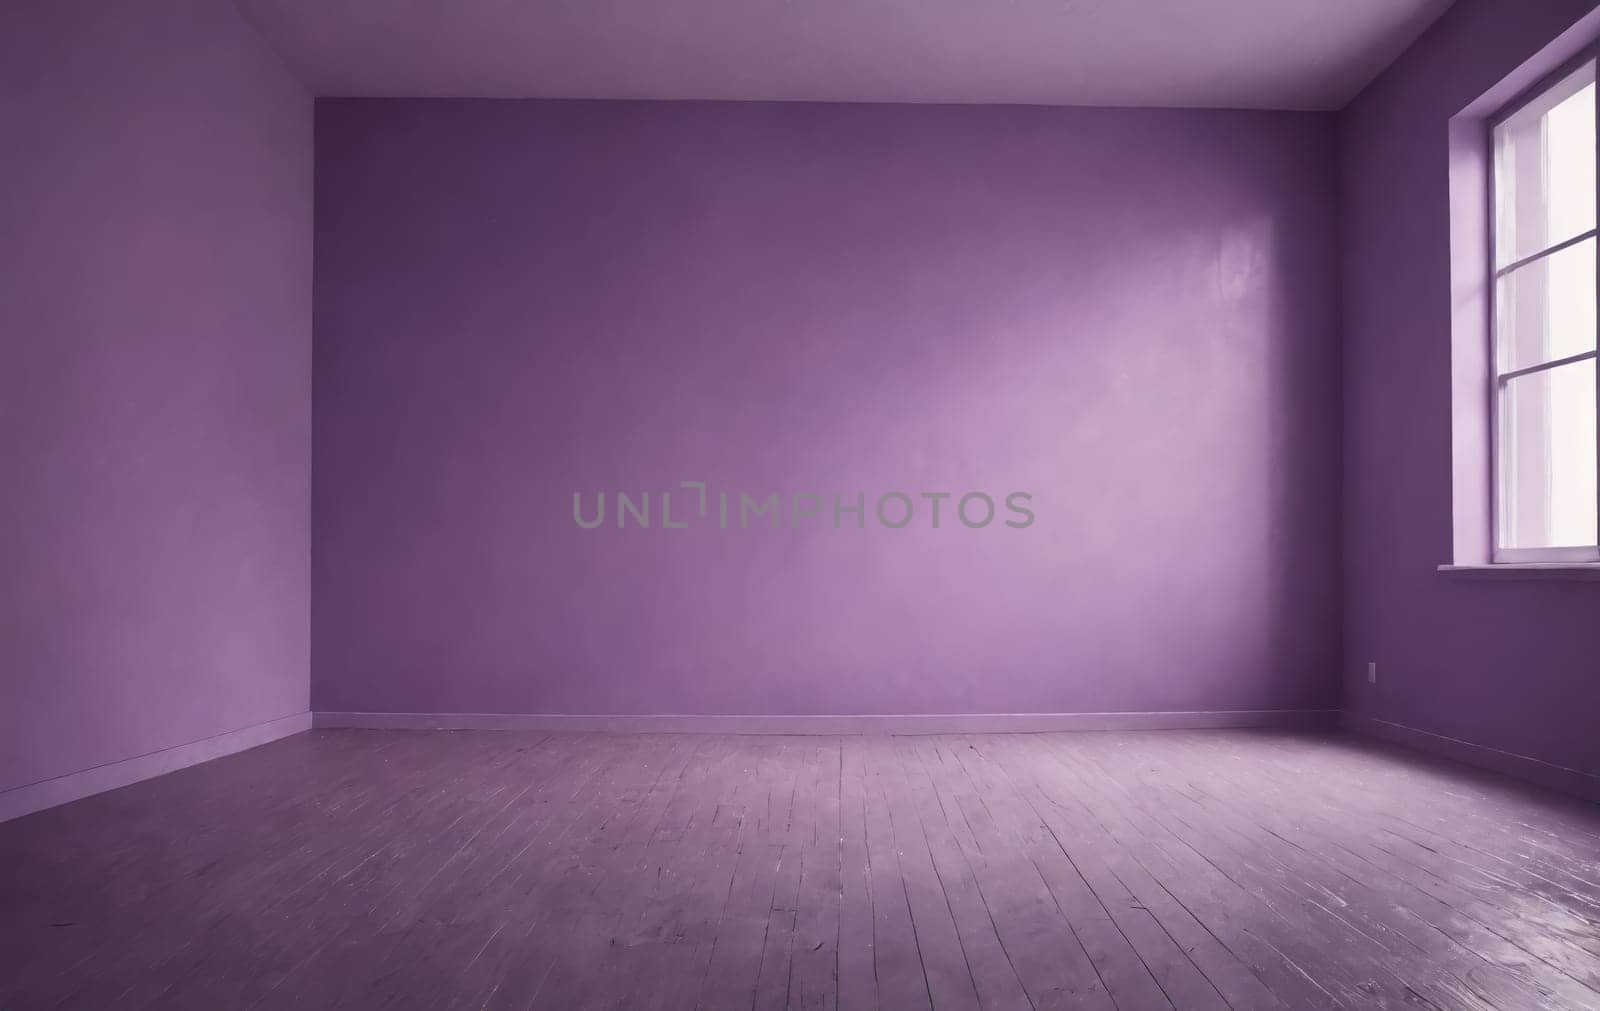 Abstract empty light gradient purple studio room.